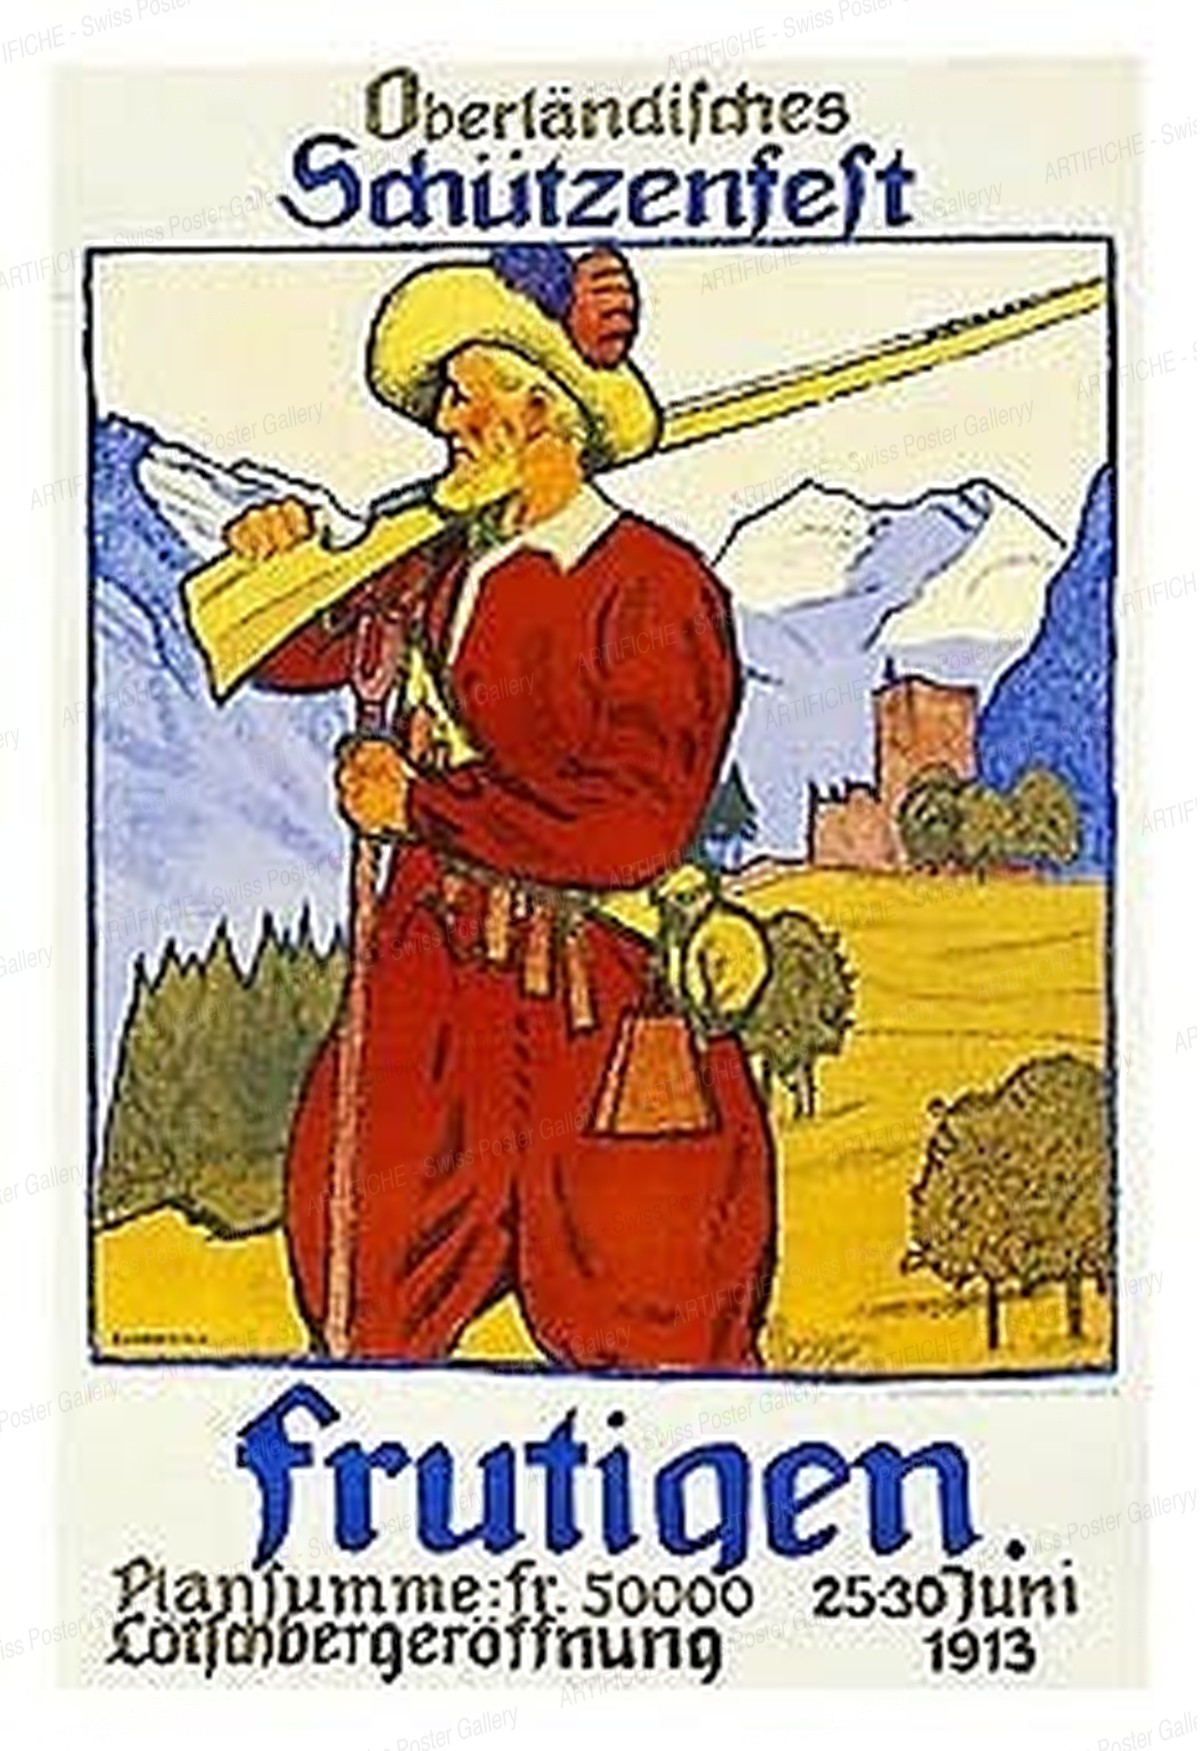 Oberländisches Schützenfest Frutigen – Plansumme: Fr. 50000 – Lötschbergeröffnung – 25-30 Juni 1913, Emil Cardinaux